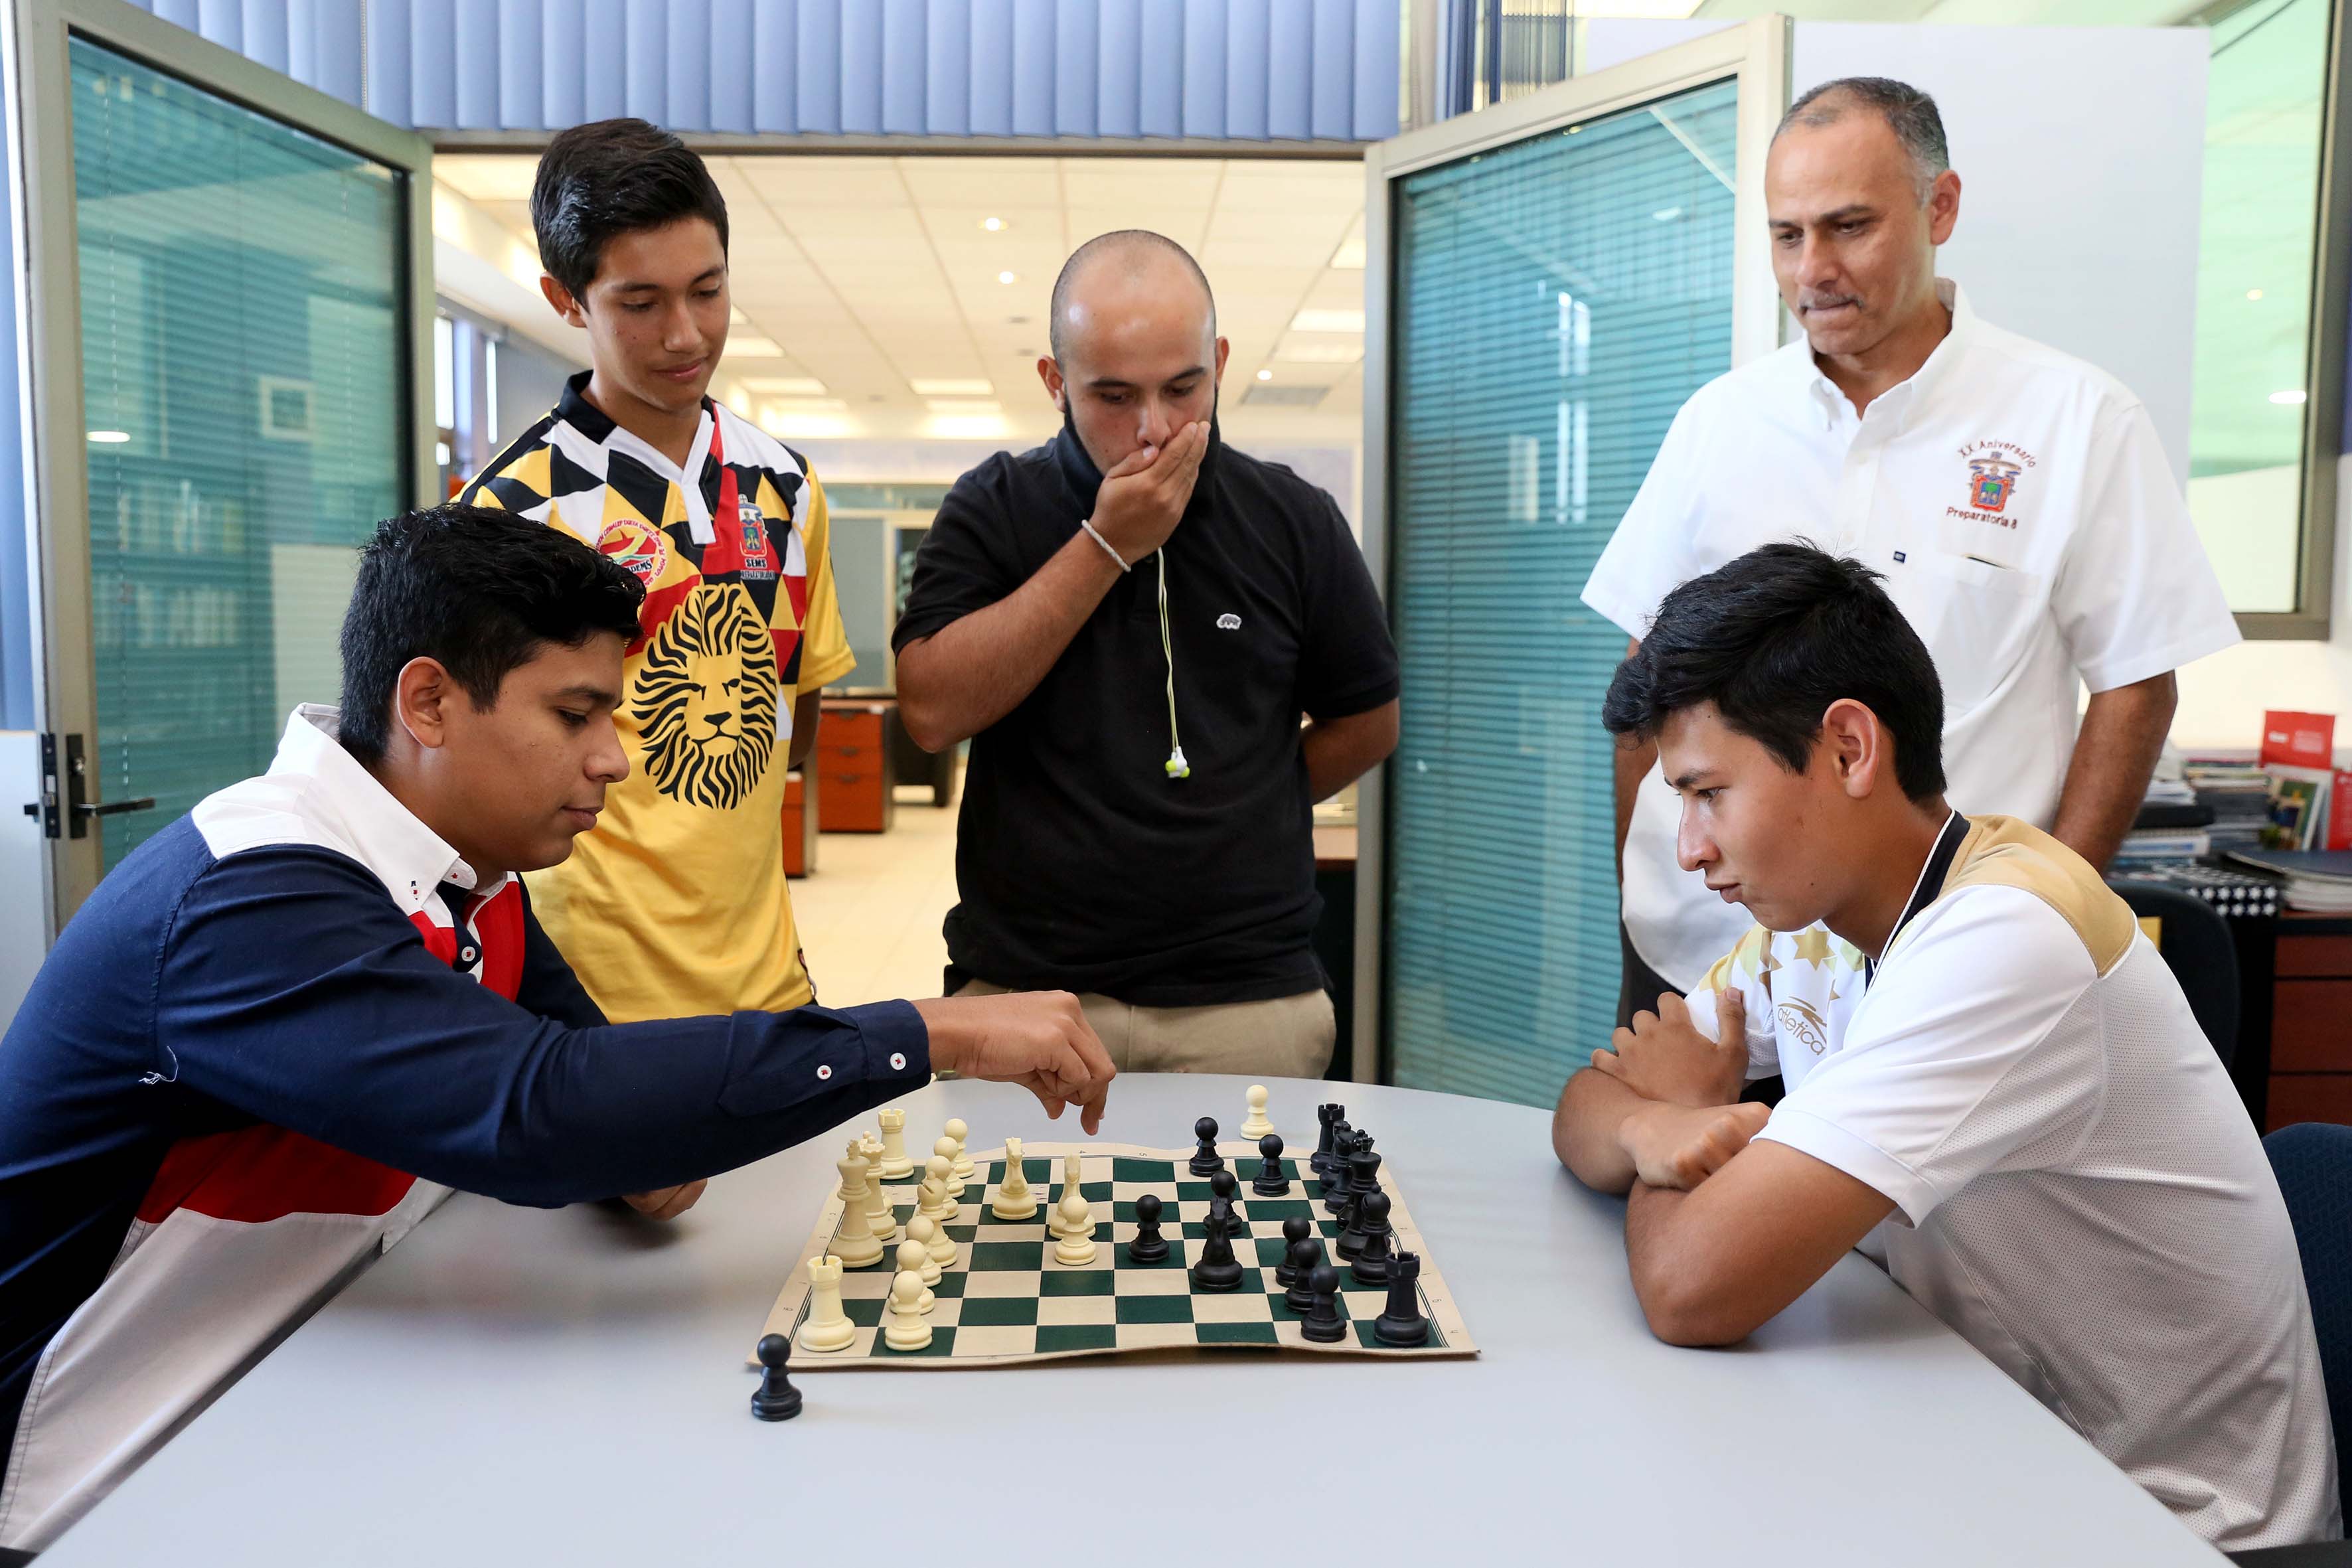 la pasion del ajedrez 25